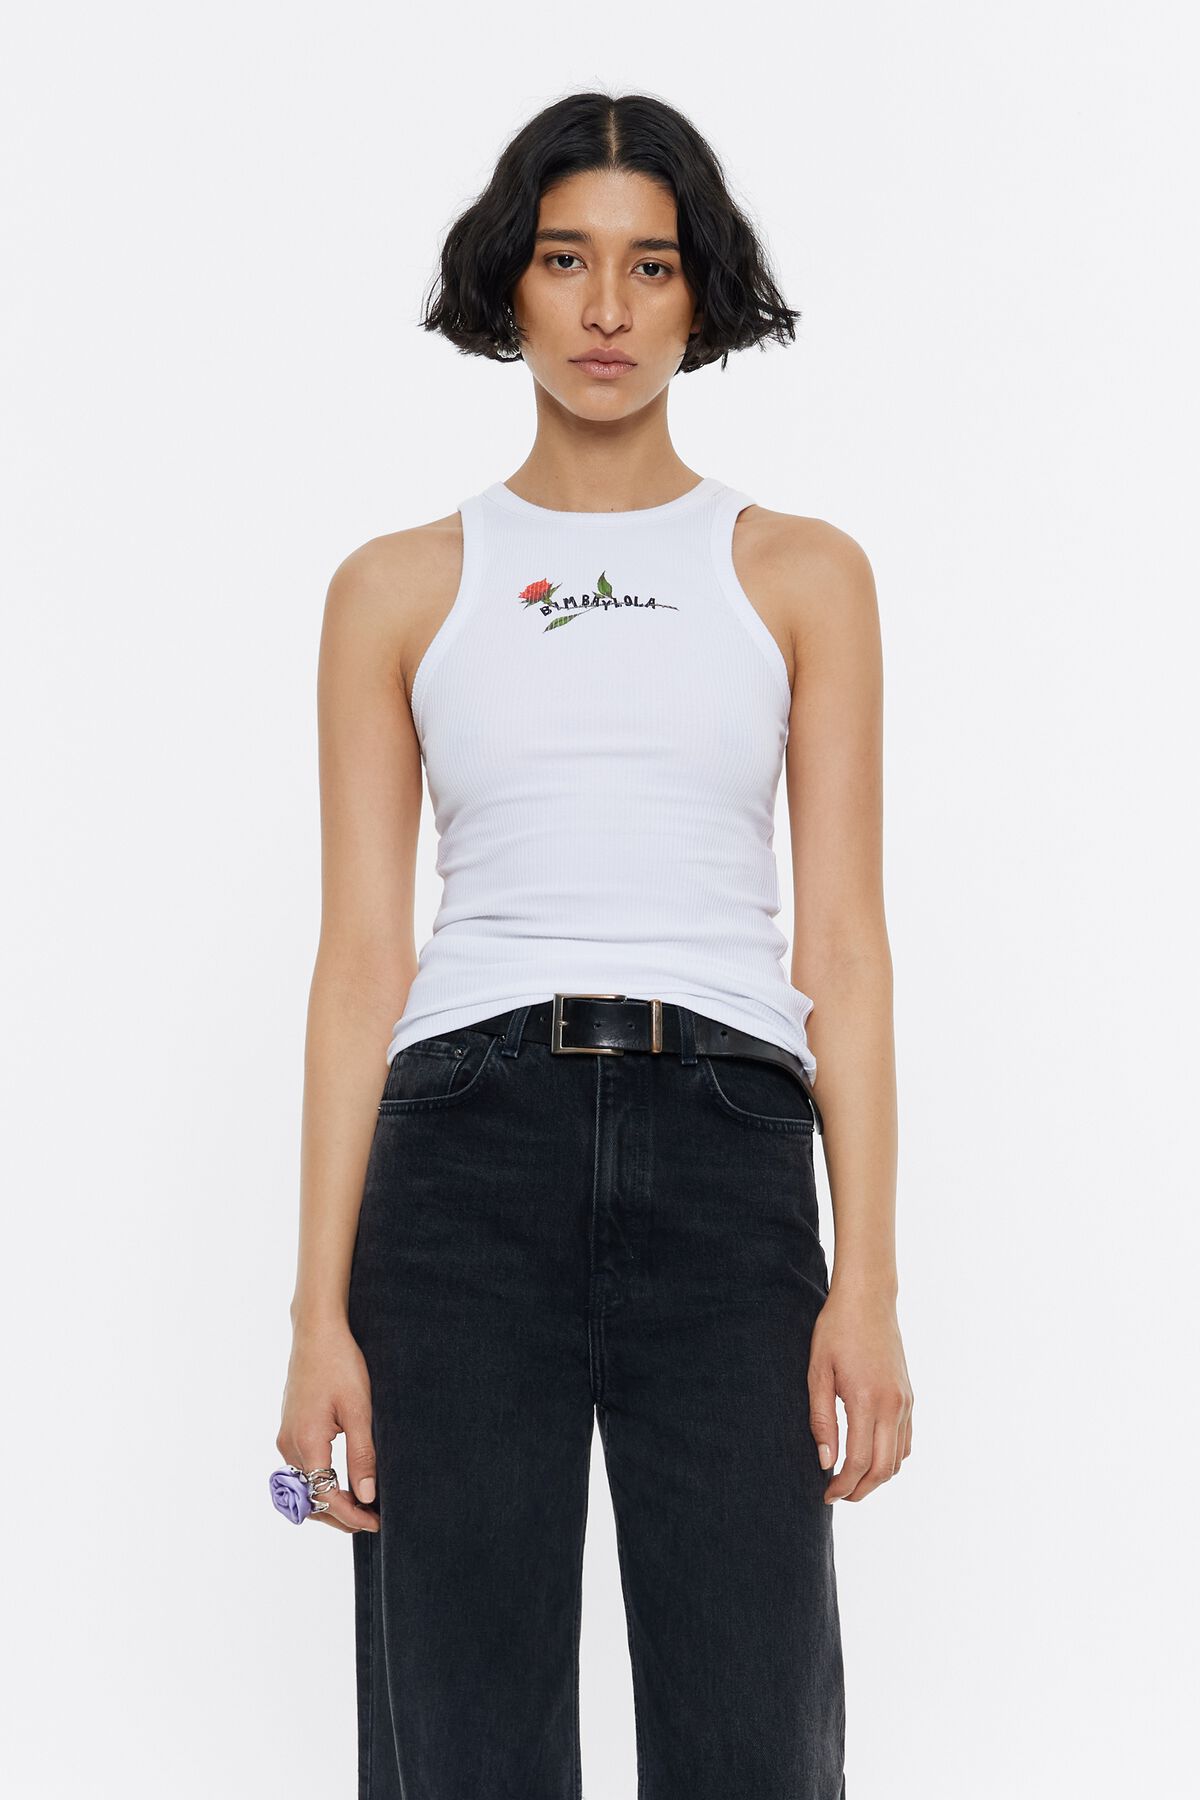 Camisetas Tirantes Mujer • CAMISETAS Dibujos Estampados